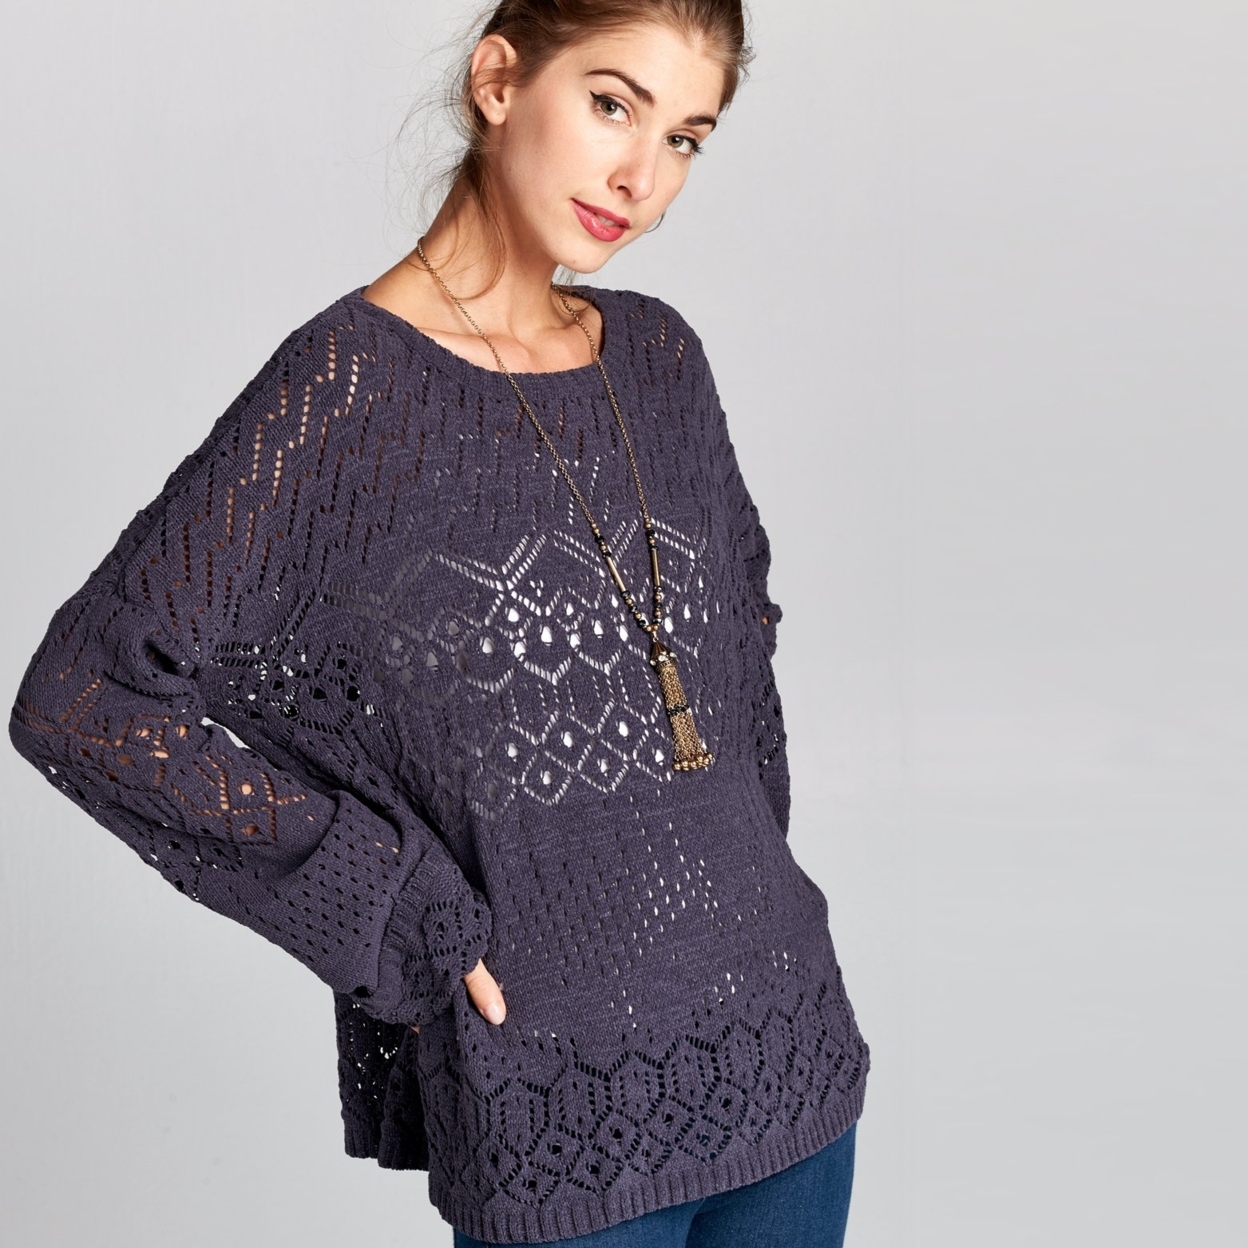 Crochet Knit Sweater - Charcoal, Small (2-6)